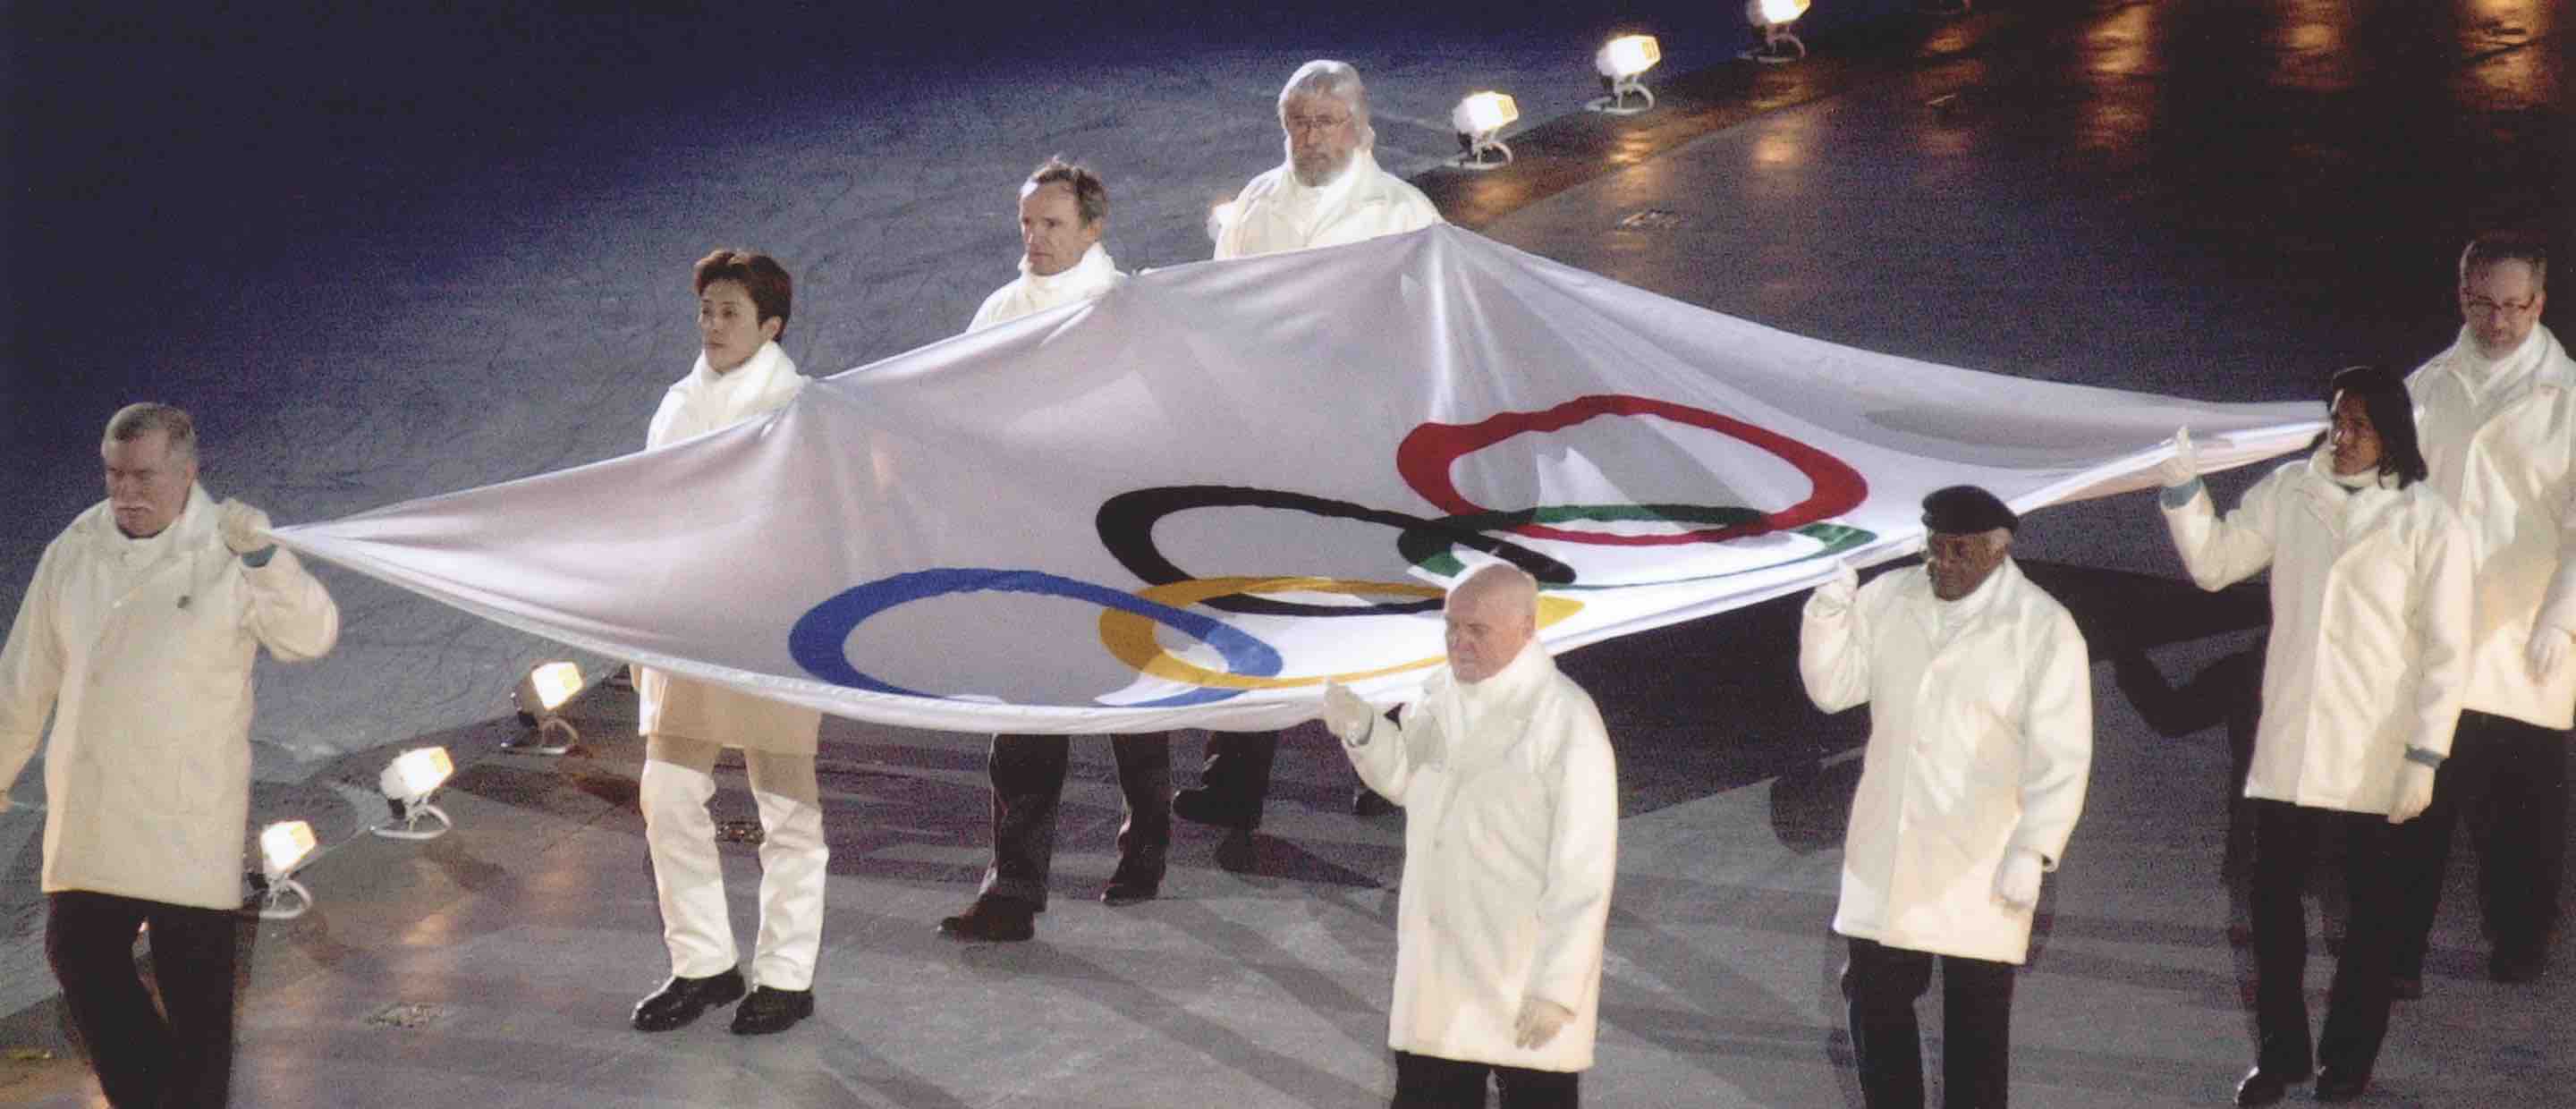 JMC 2002 Olympic Ceremony.jpg